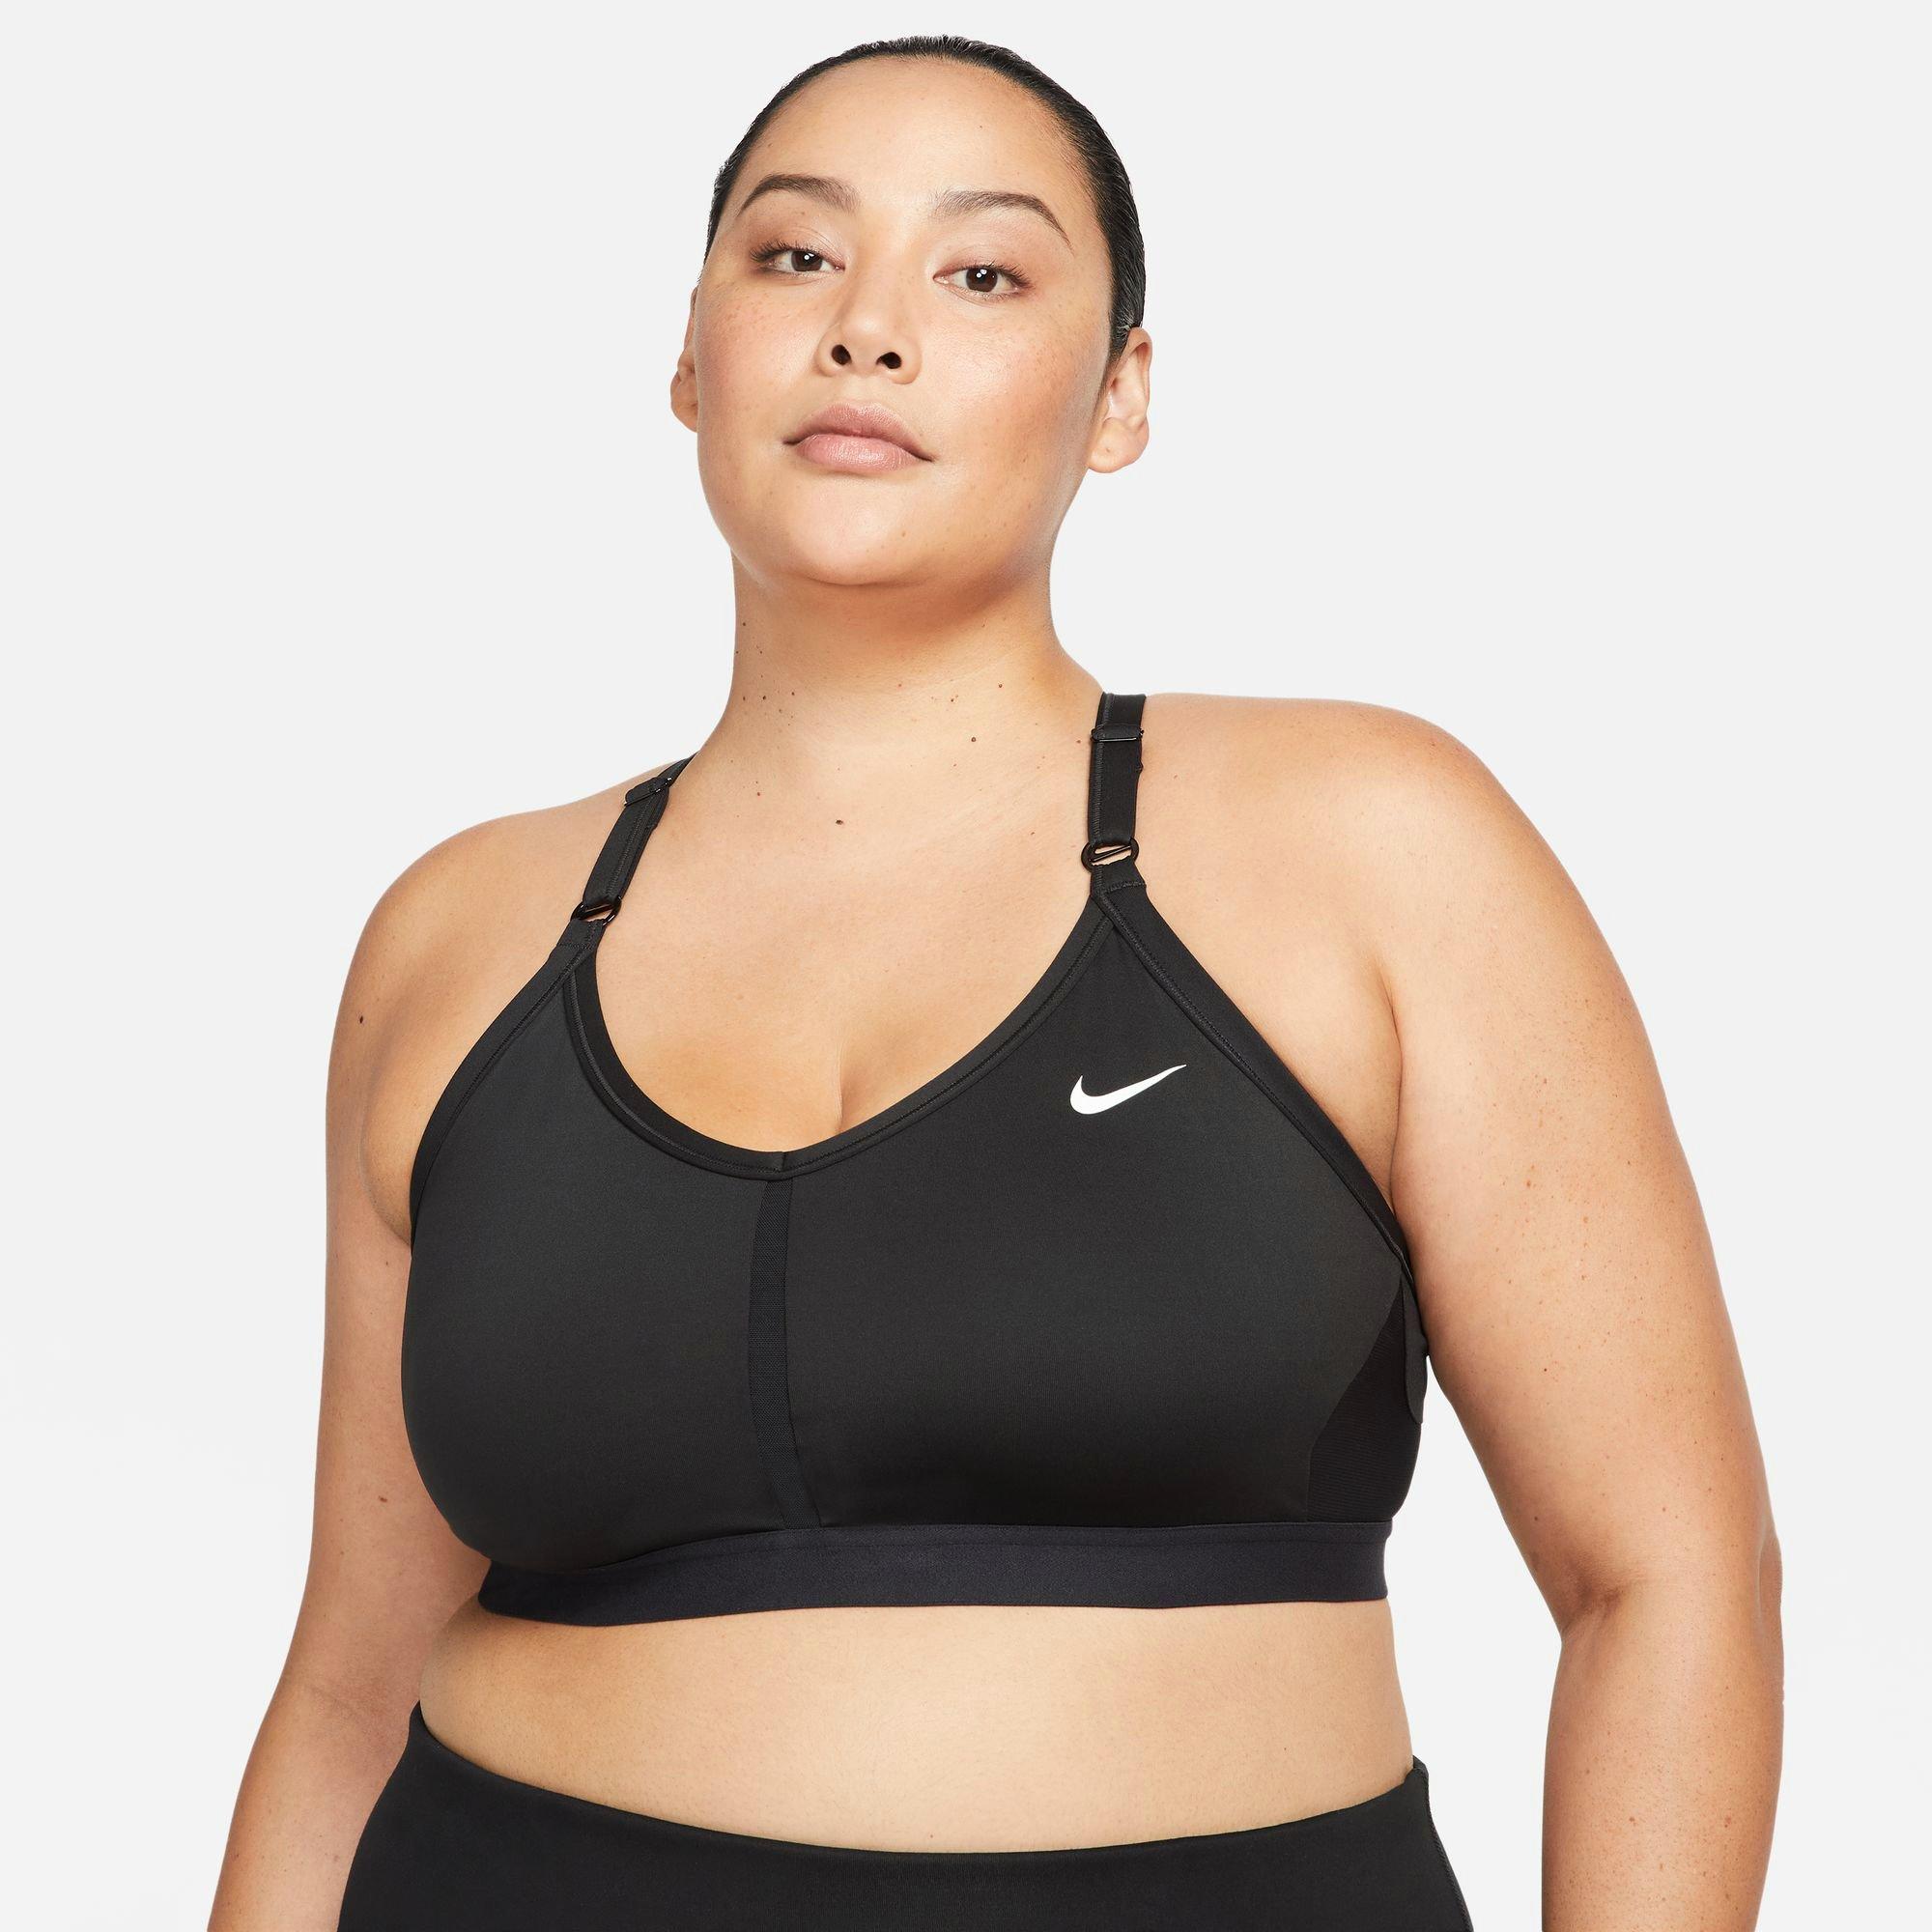 Nike Indy sports bra - Large  Sports bra, Sports bra sizing